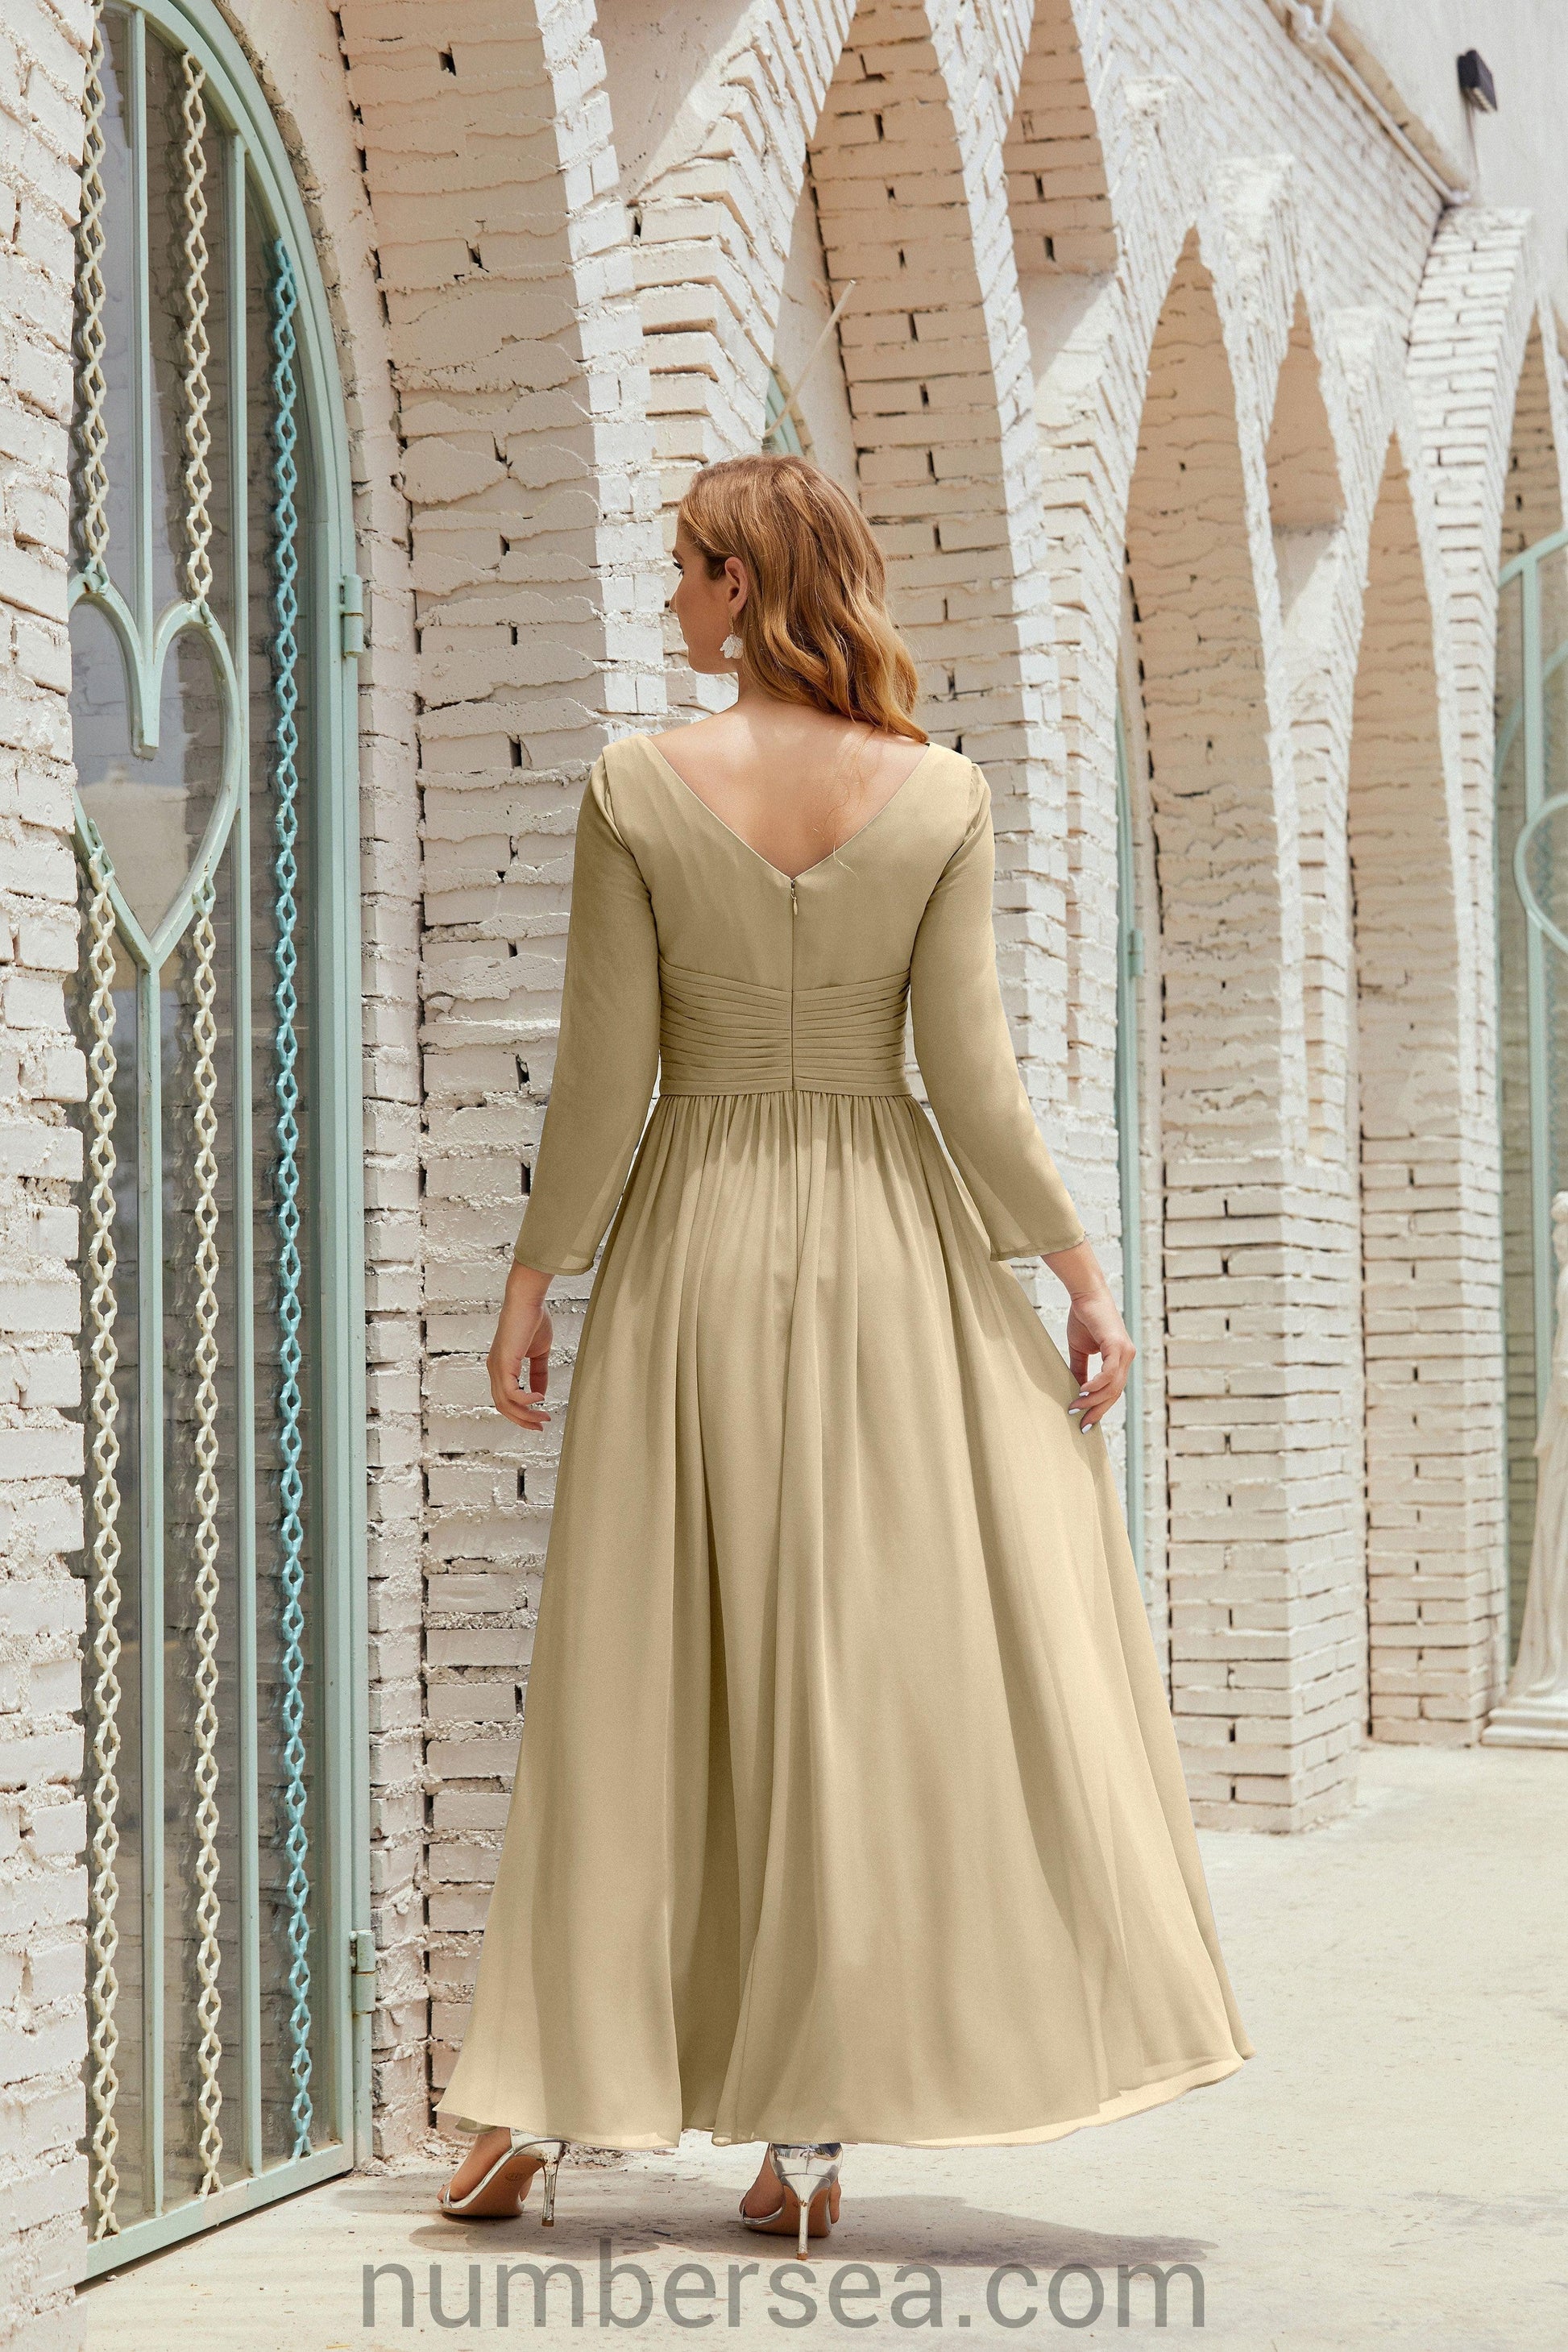 Numbersea Bridesmaid Dress Chiffon Formal Party Dress Evening Dress 28016-numbersea